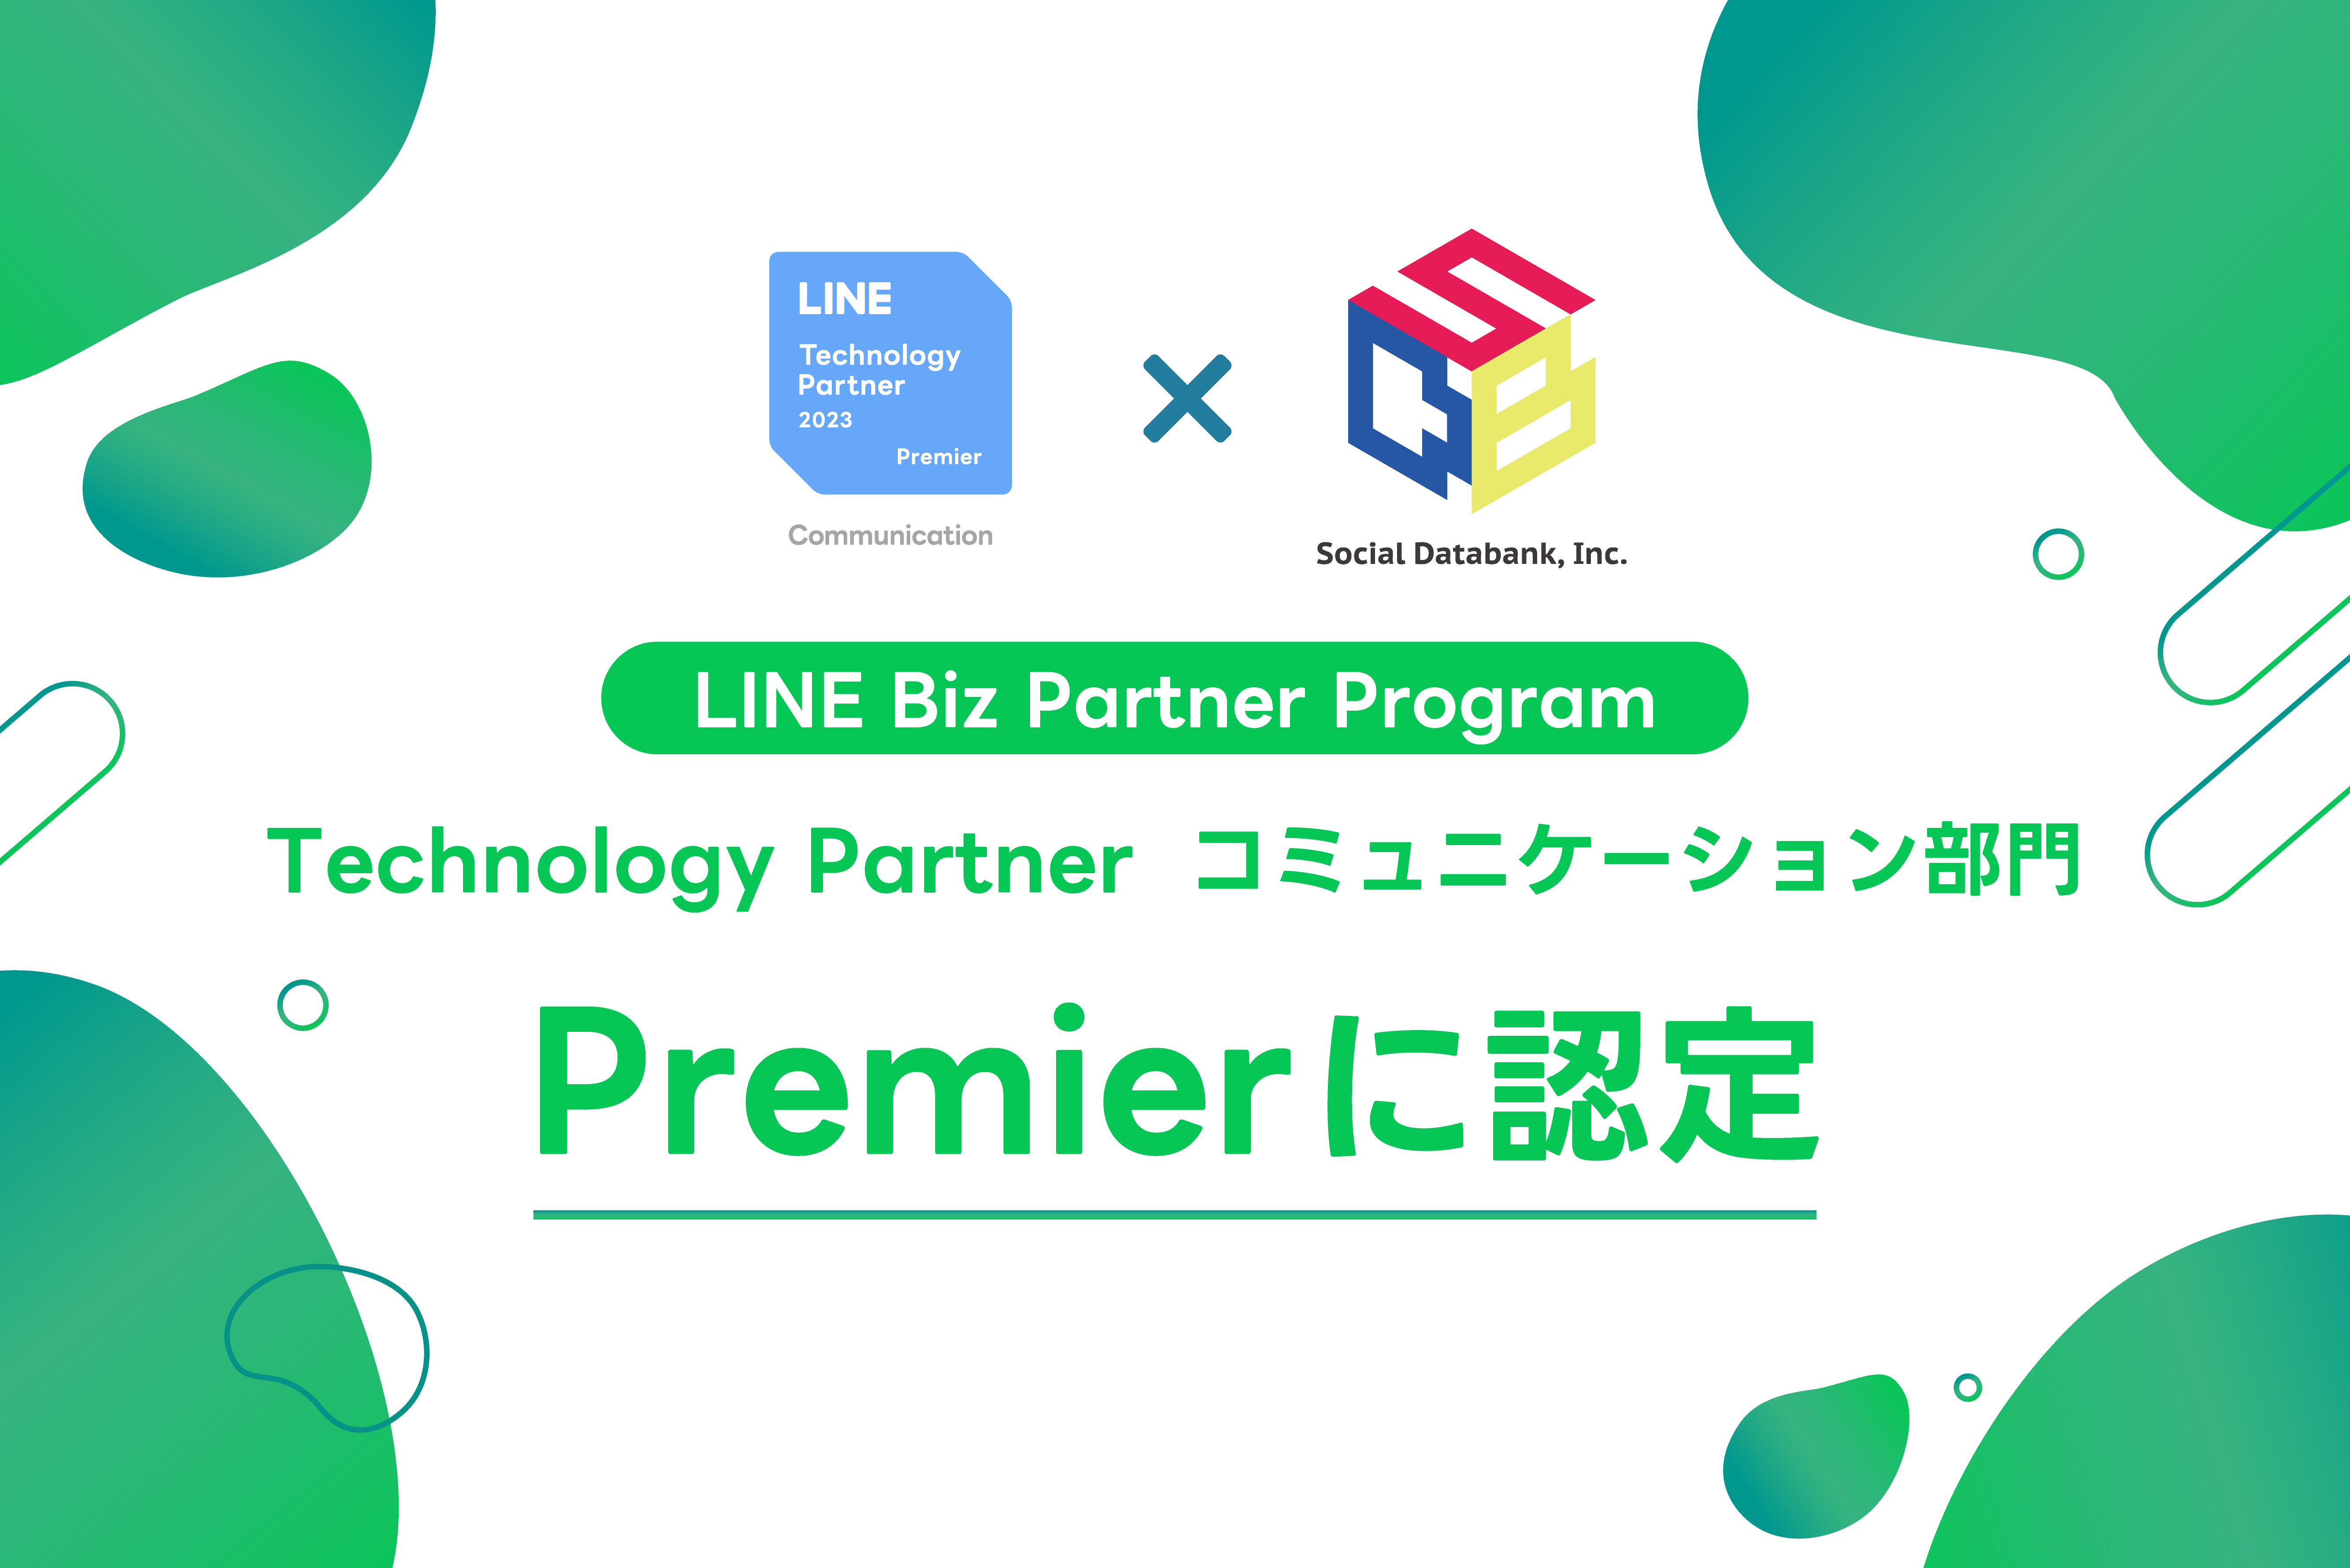 「LINE Biz Partner Program」において「Technology Partner」のコミュニケーション部門「Premier」に認定